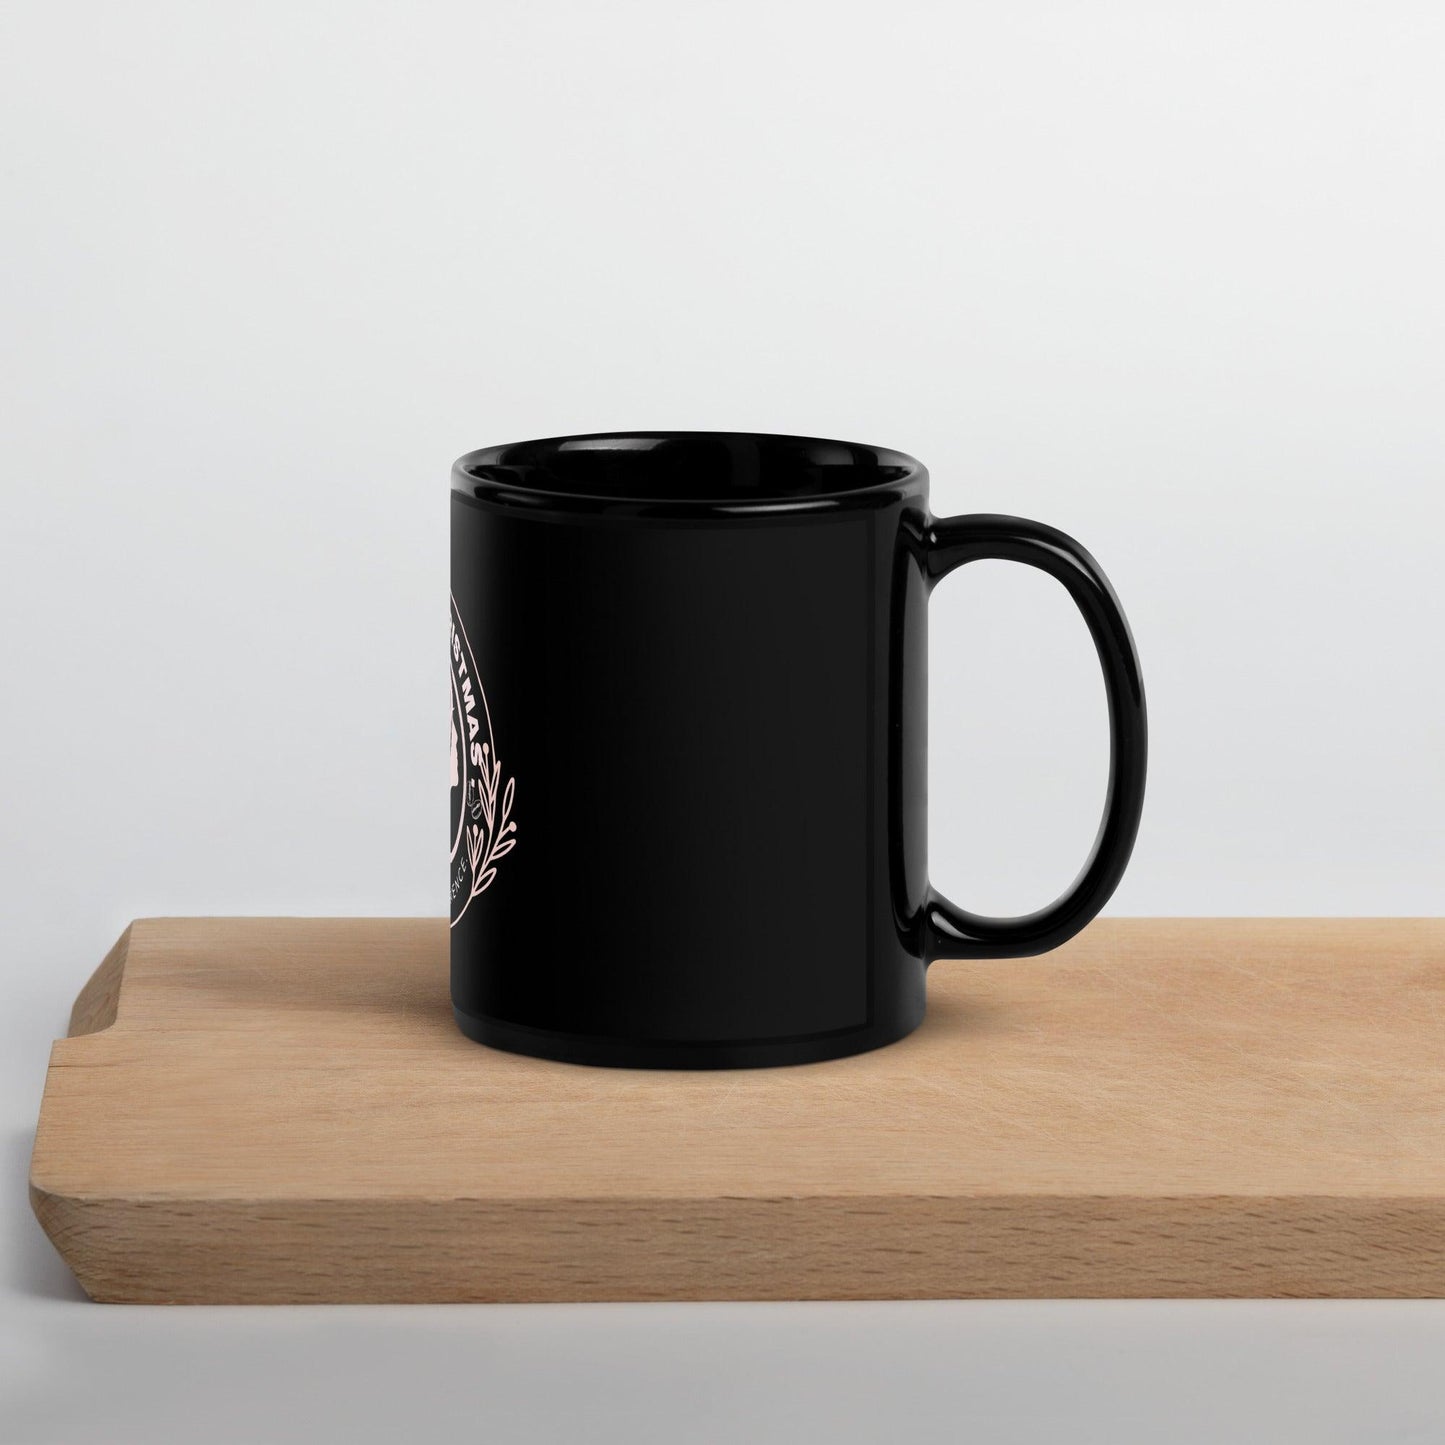 Luxury Coffee and Christmas Mug Gift - COFFEEBRE